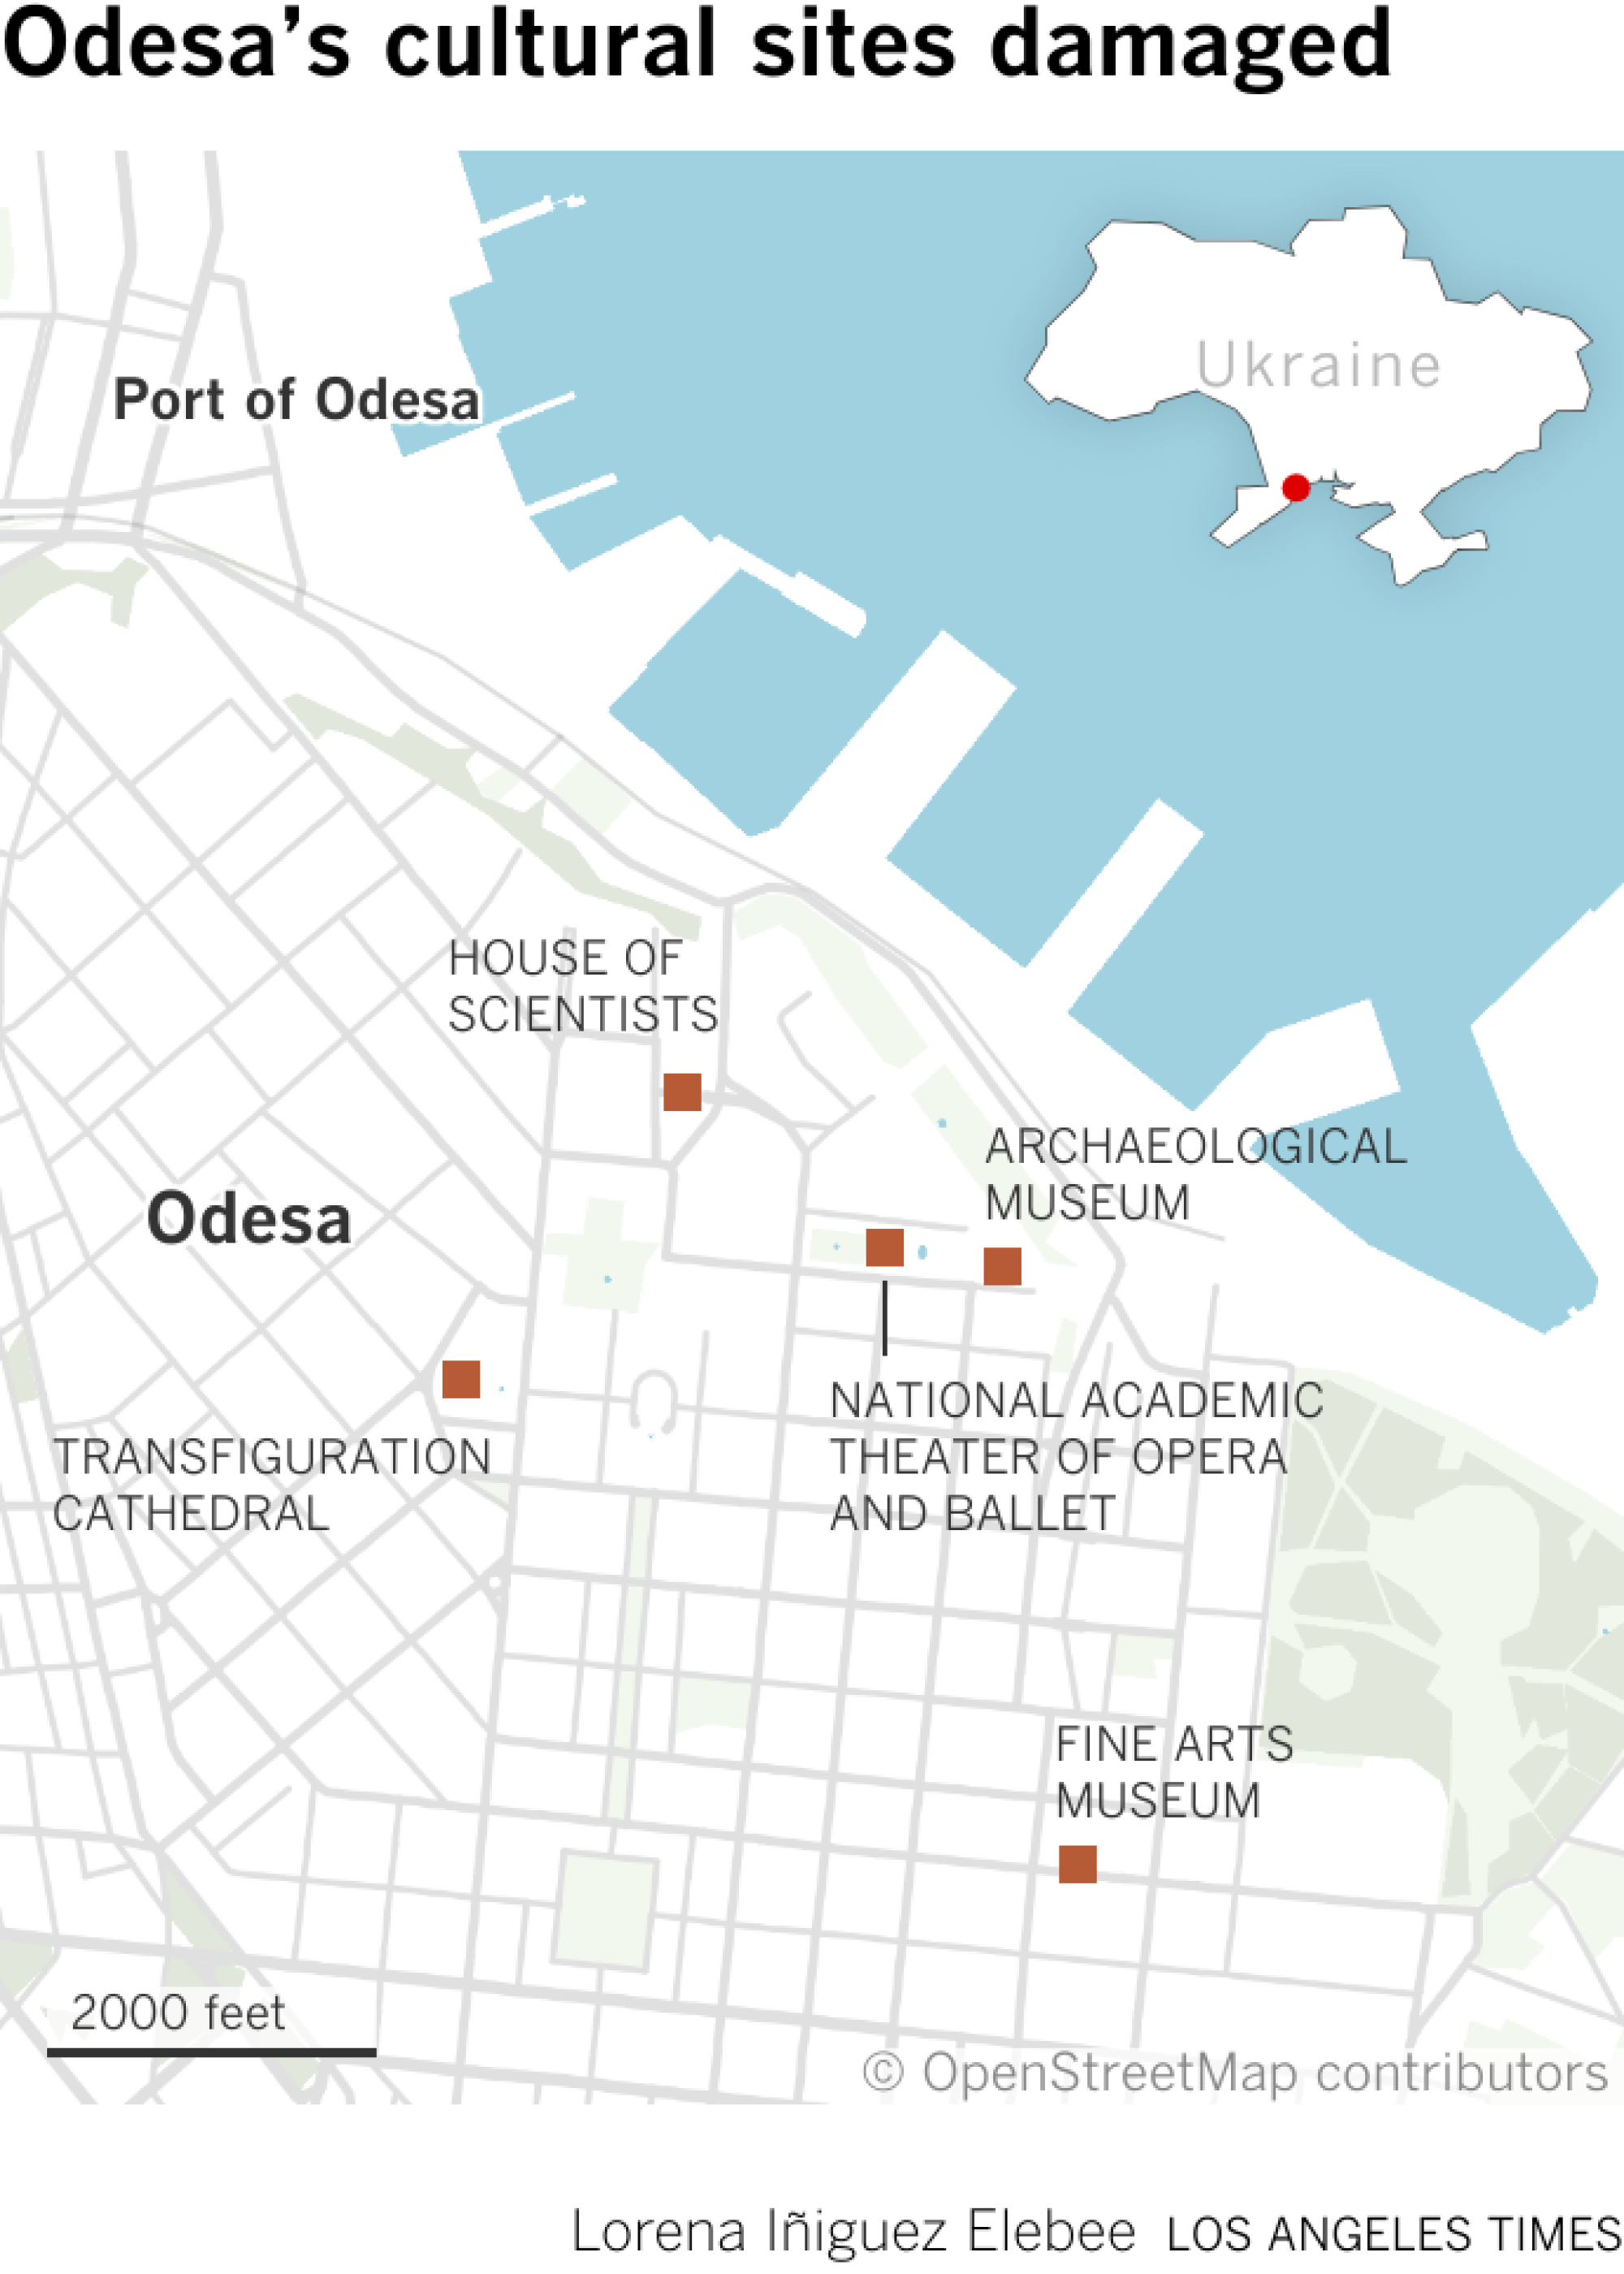 Map shows damaged cultural sites in Odesa, Ukraine.